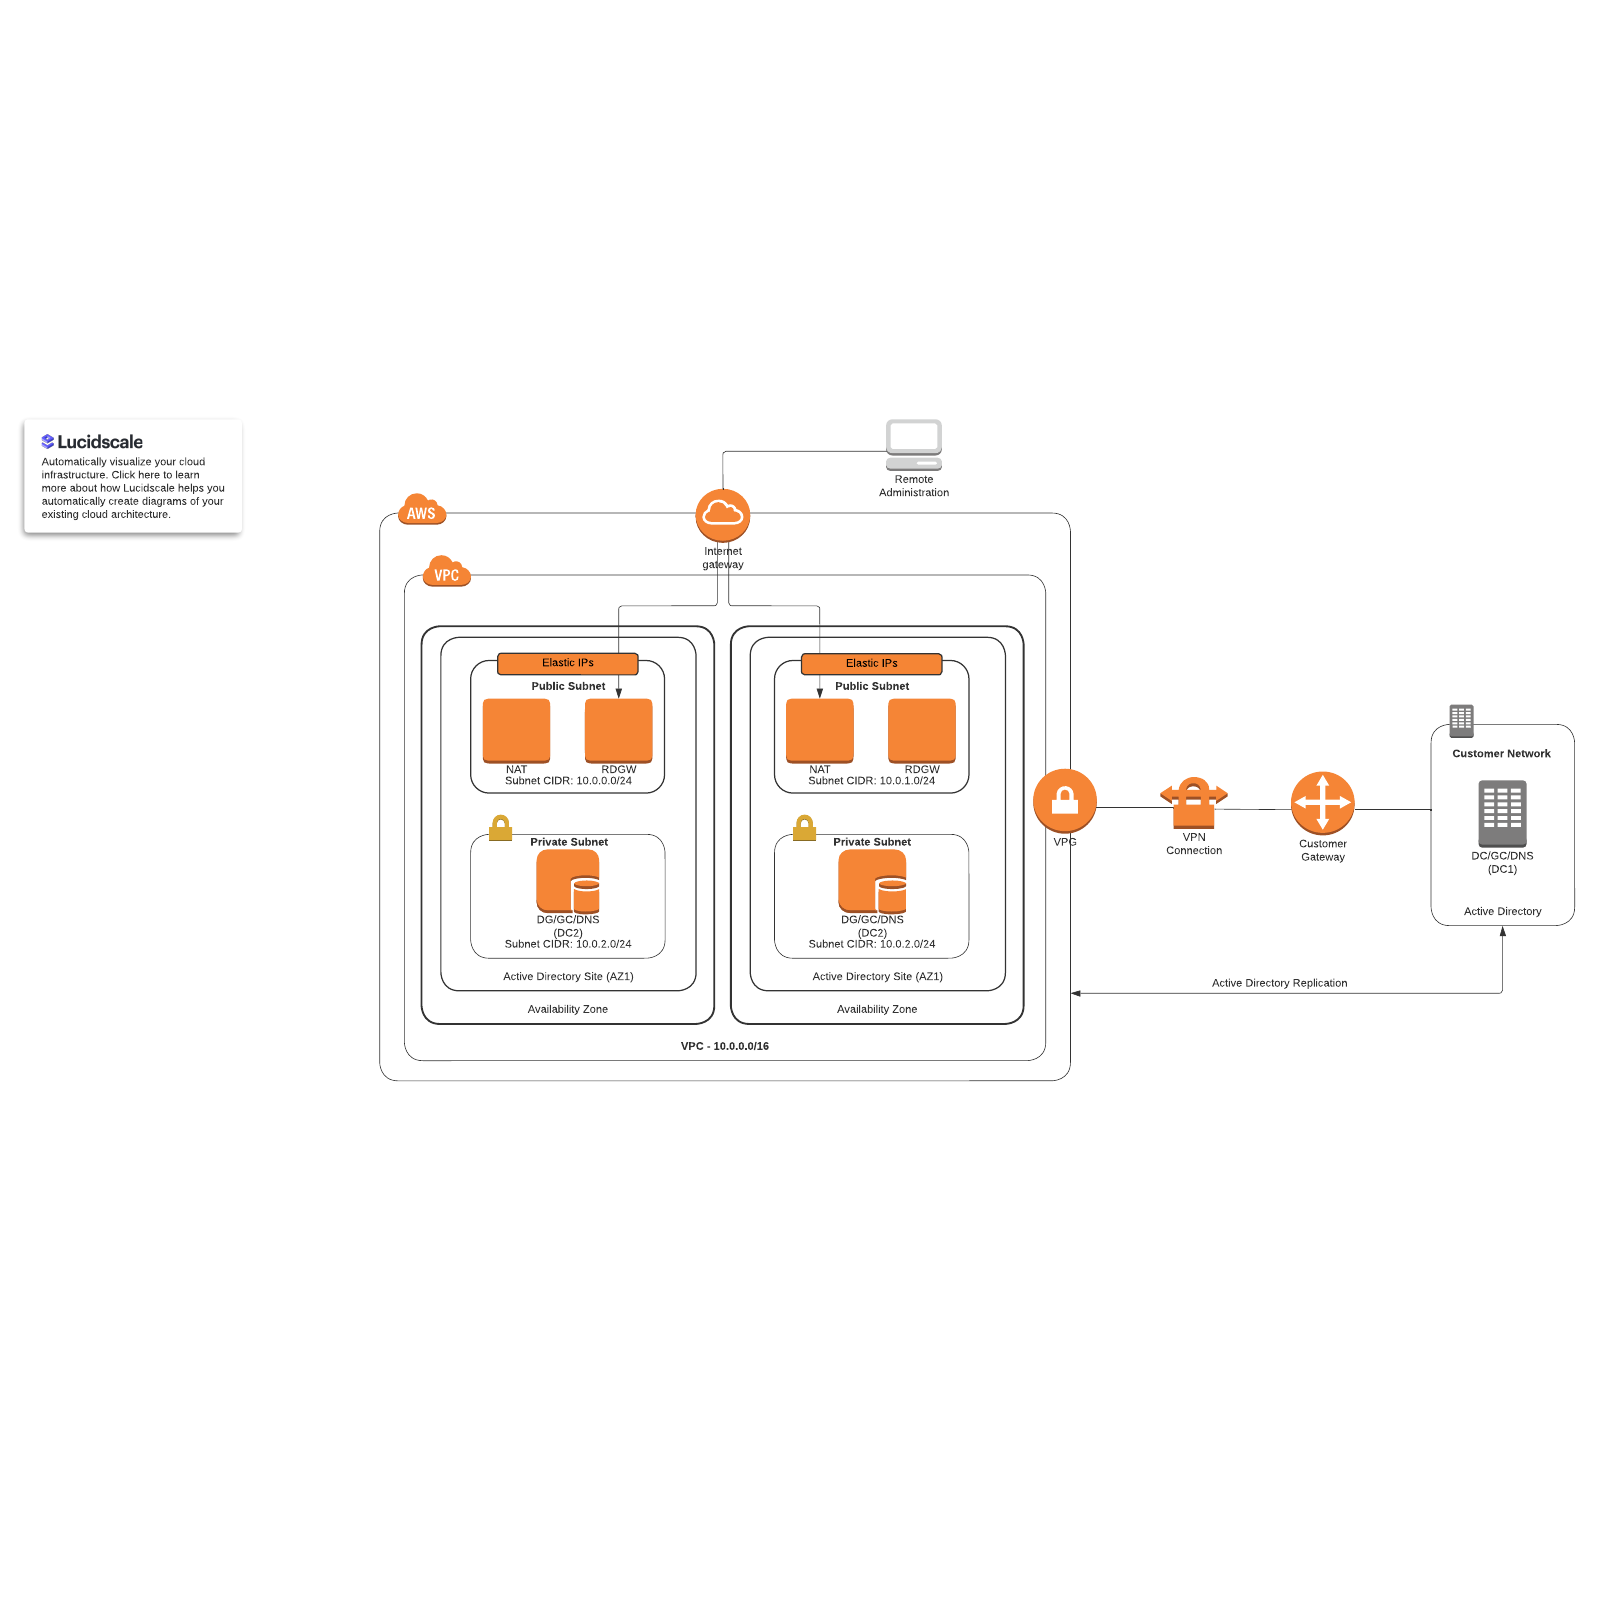 AWS network diagram template